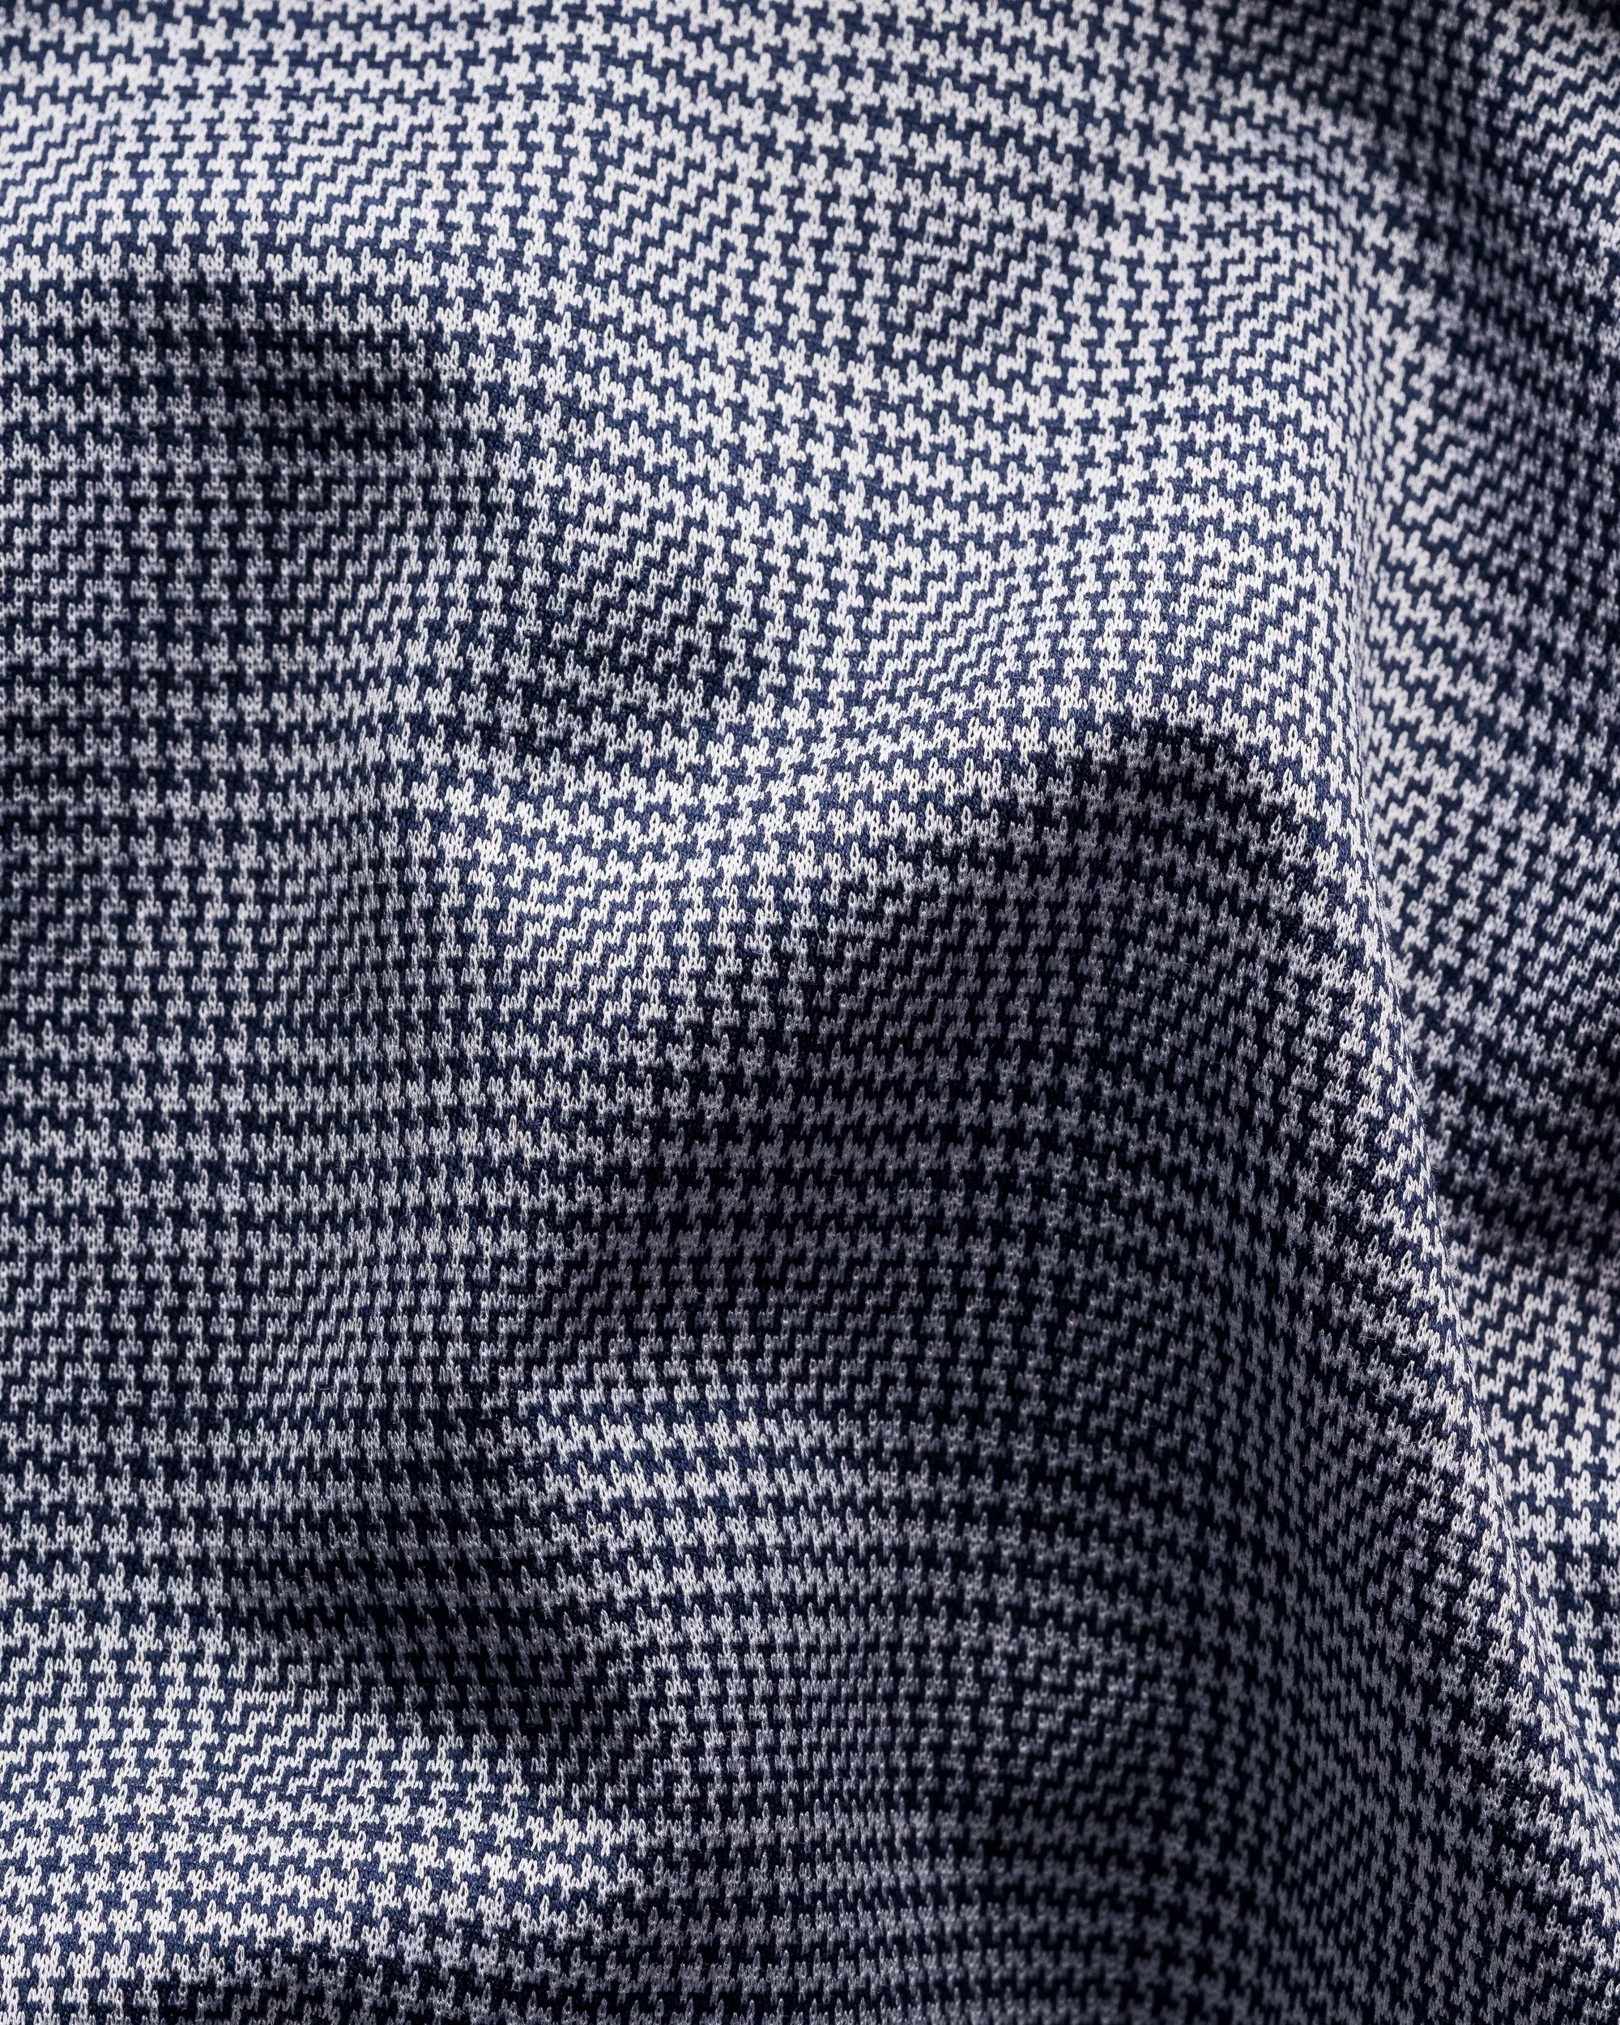 Eton - solid navy blue knit king